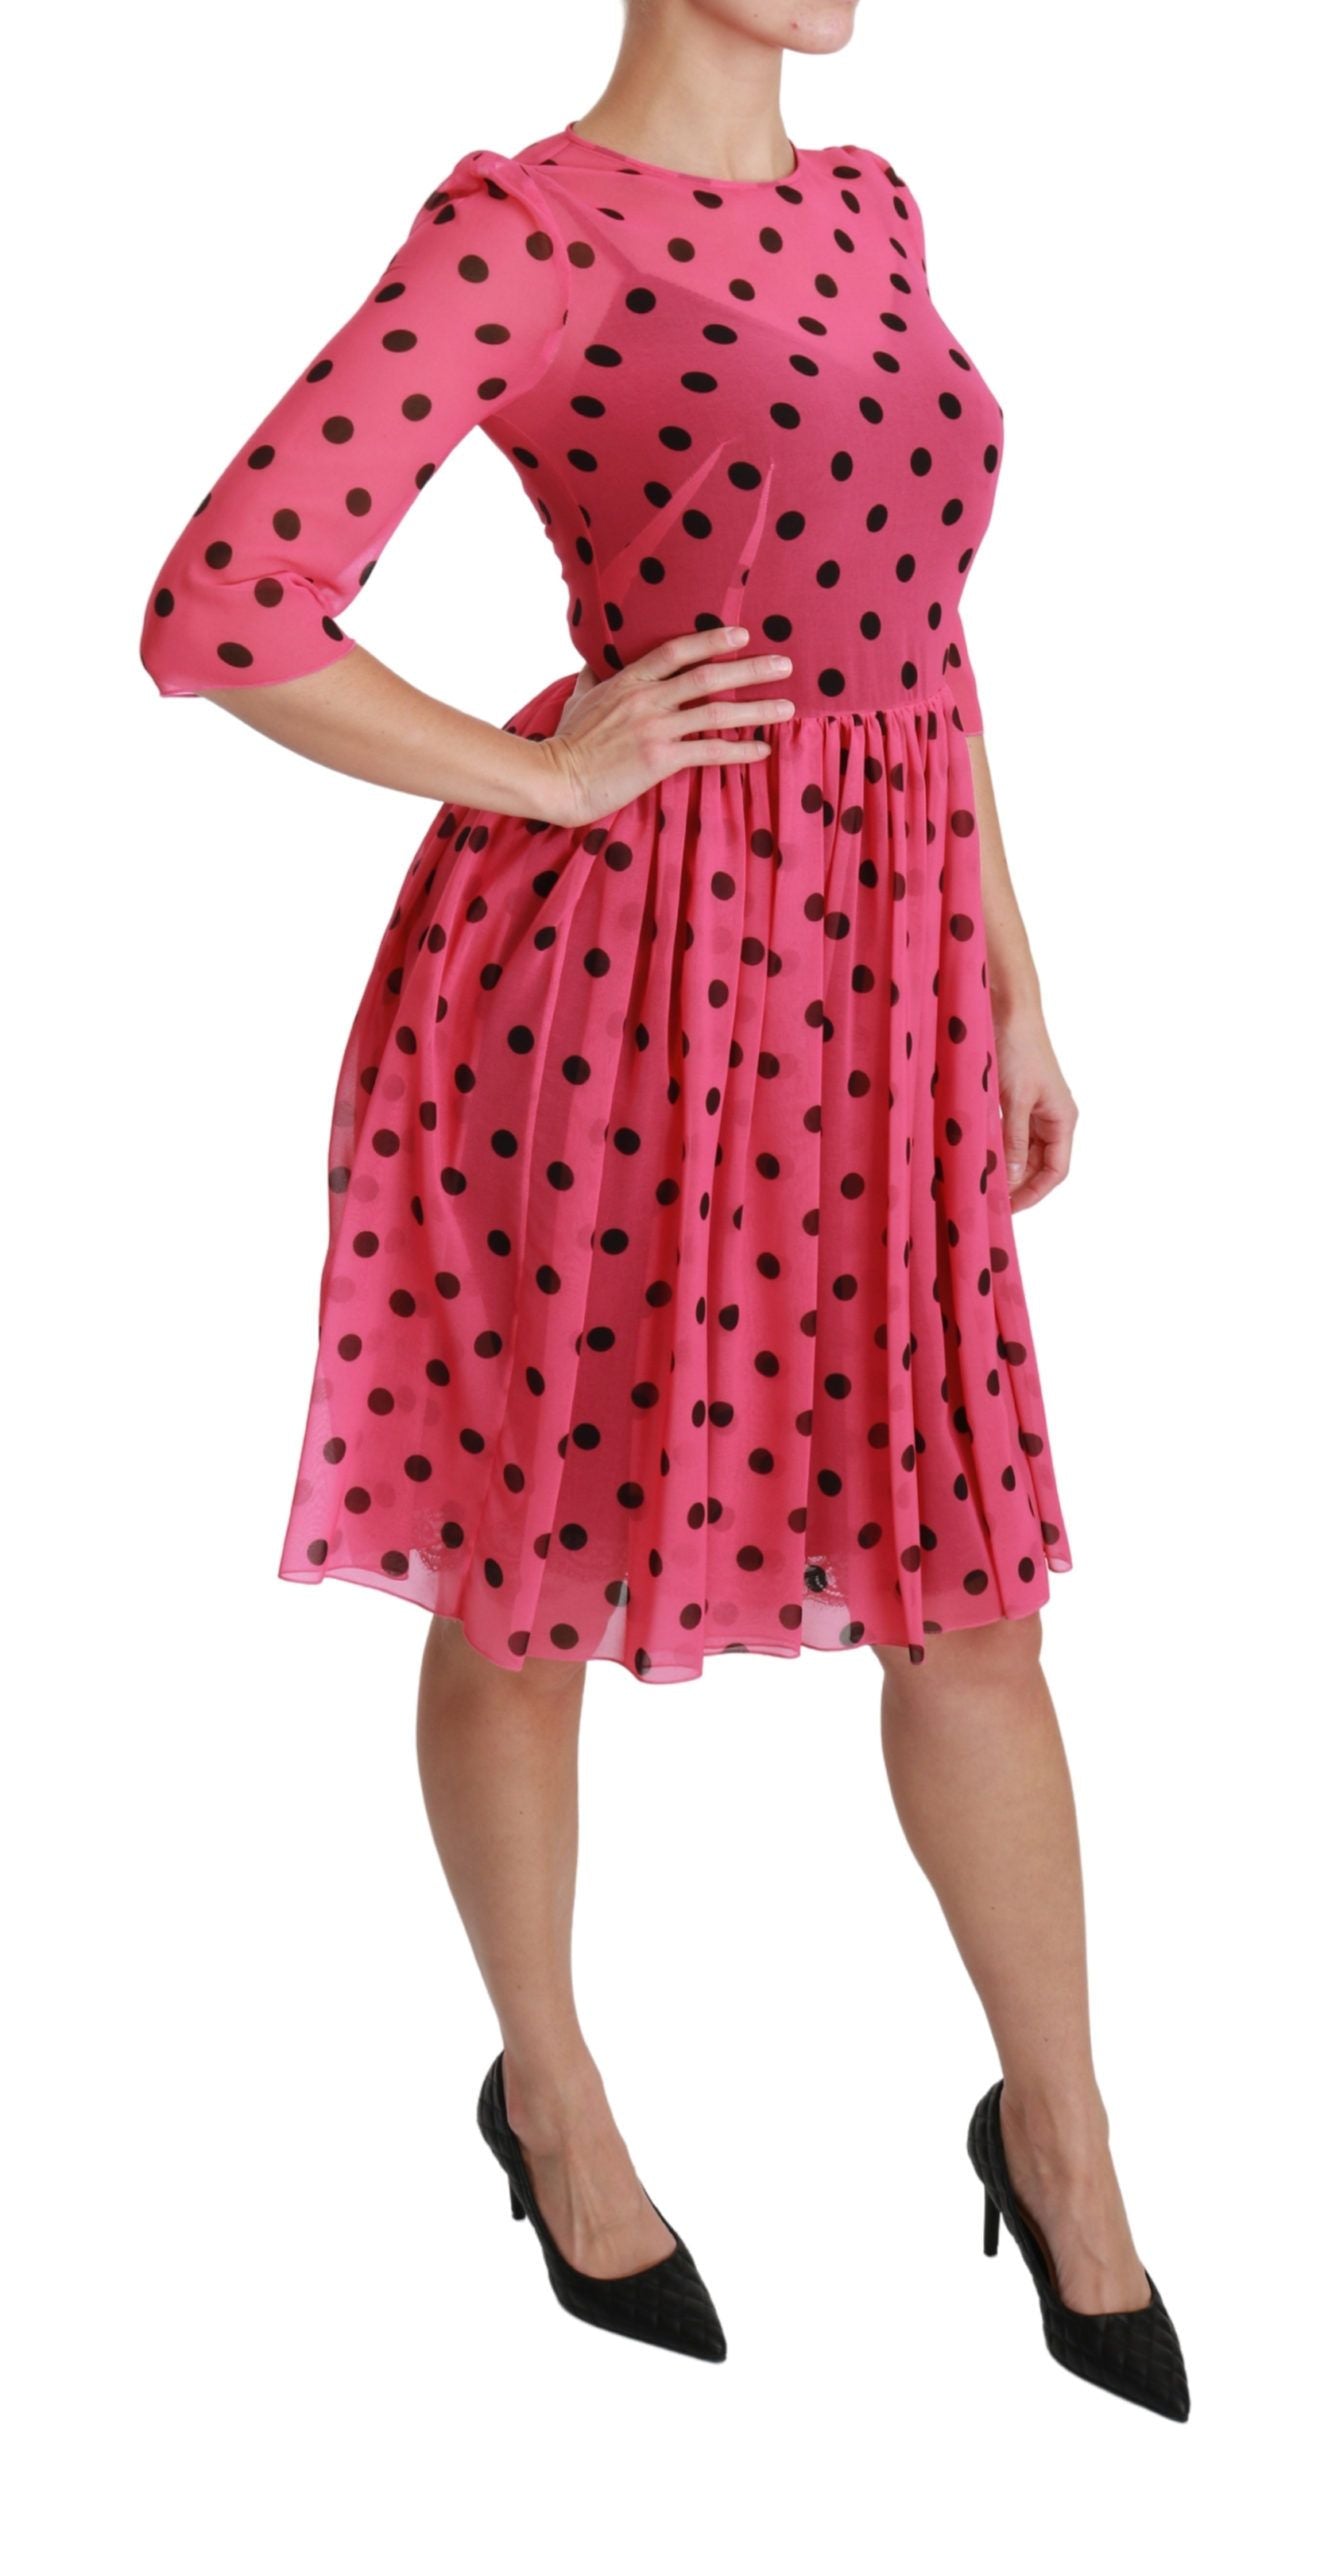 Elegant Polka Dot A-Line Knee Length Dress